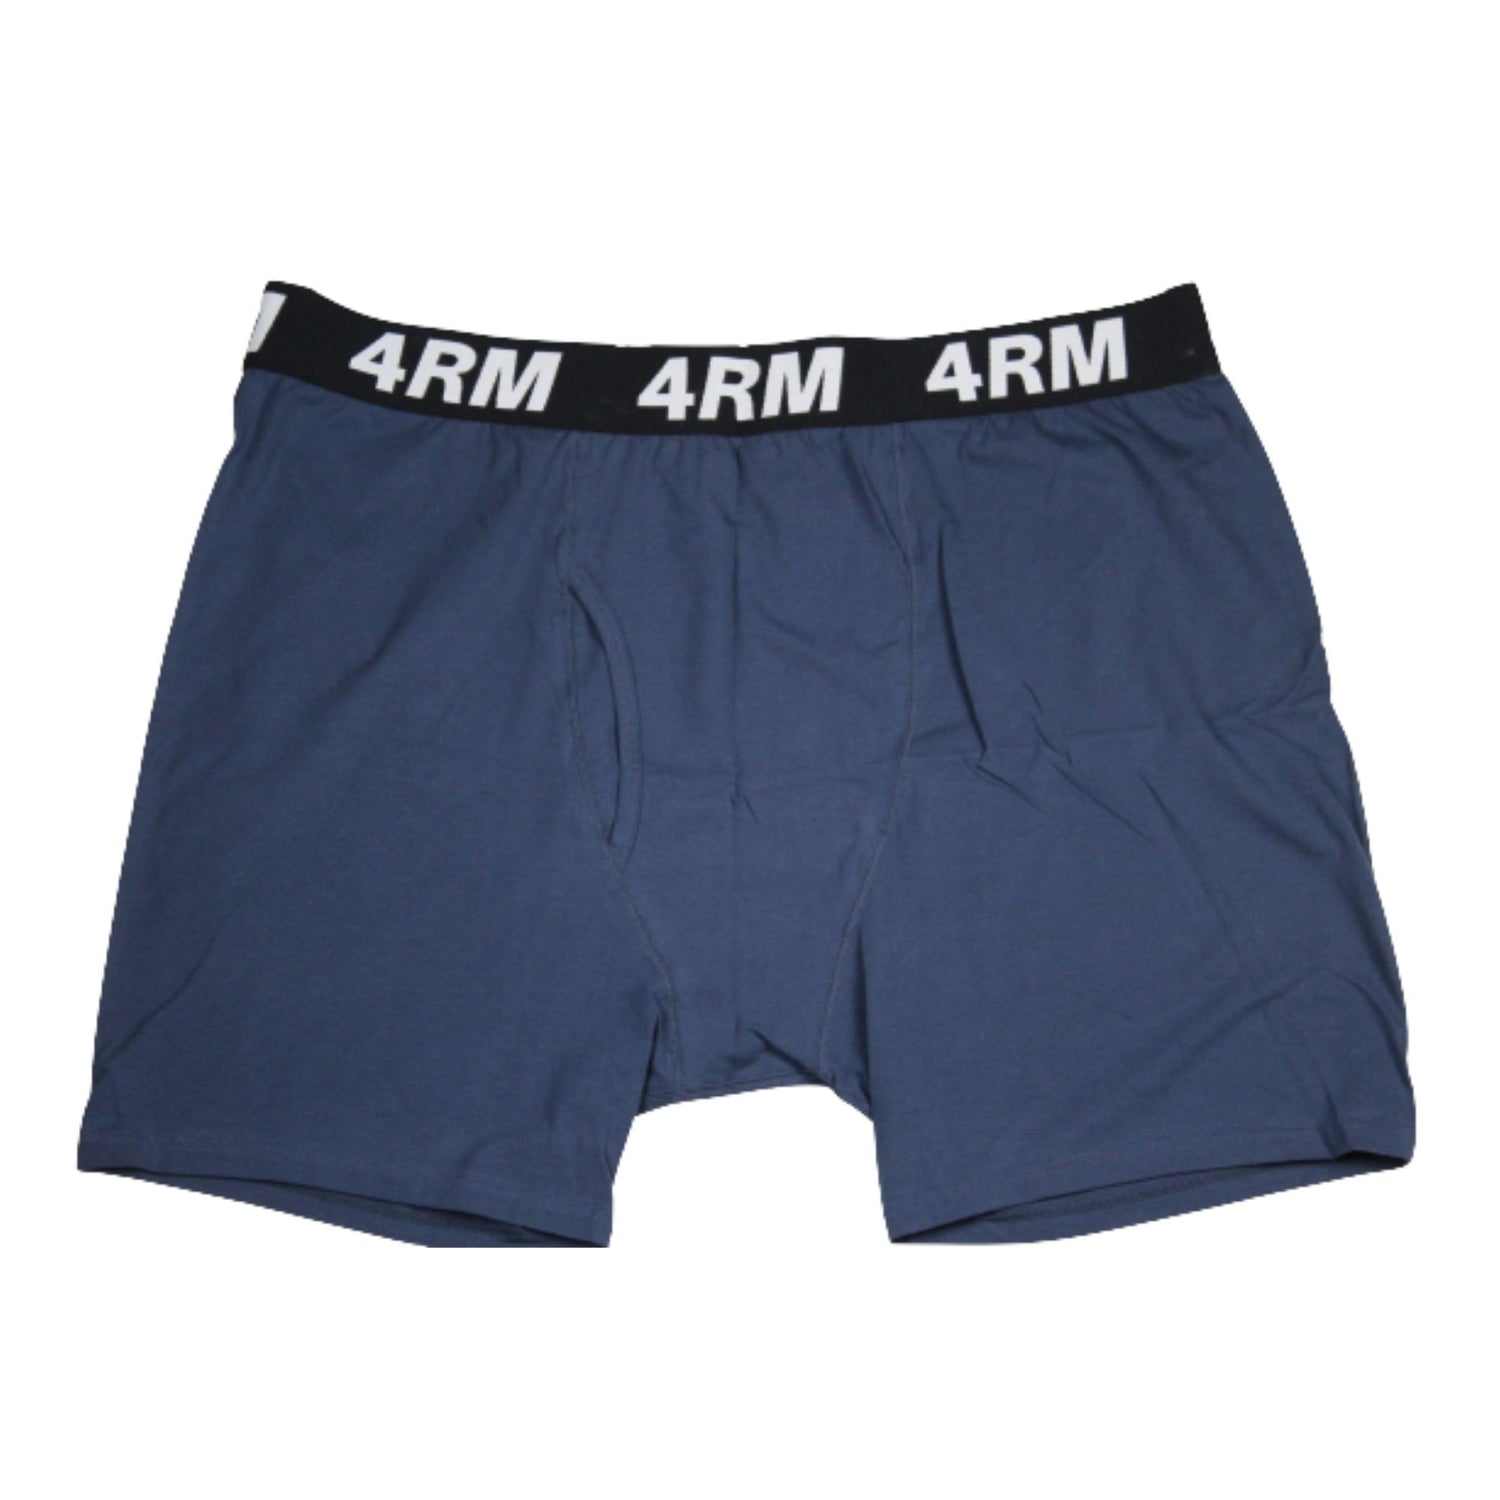 4RM Basics Boxer Briefs - The Solids - 4MAT CLOTHING BIG & TALL